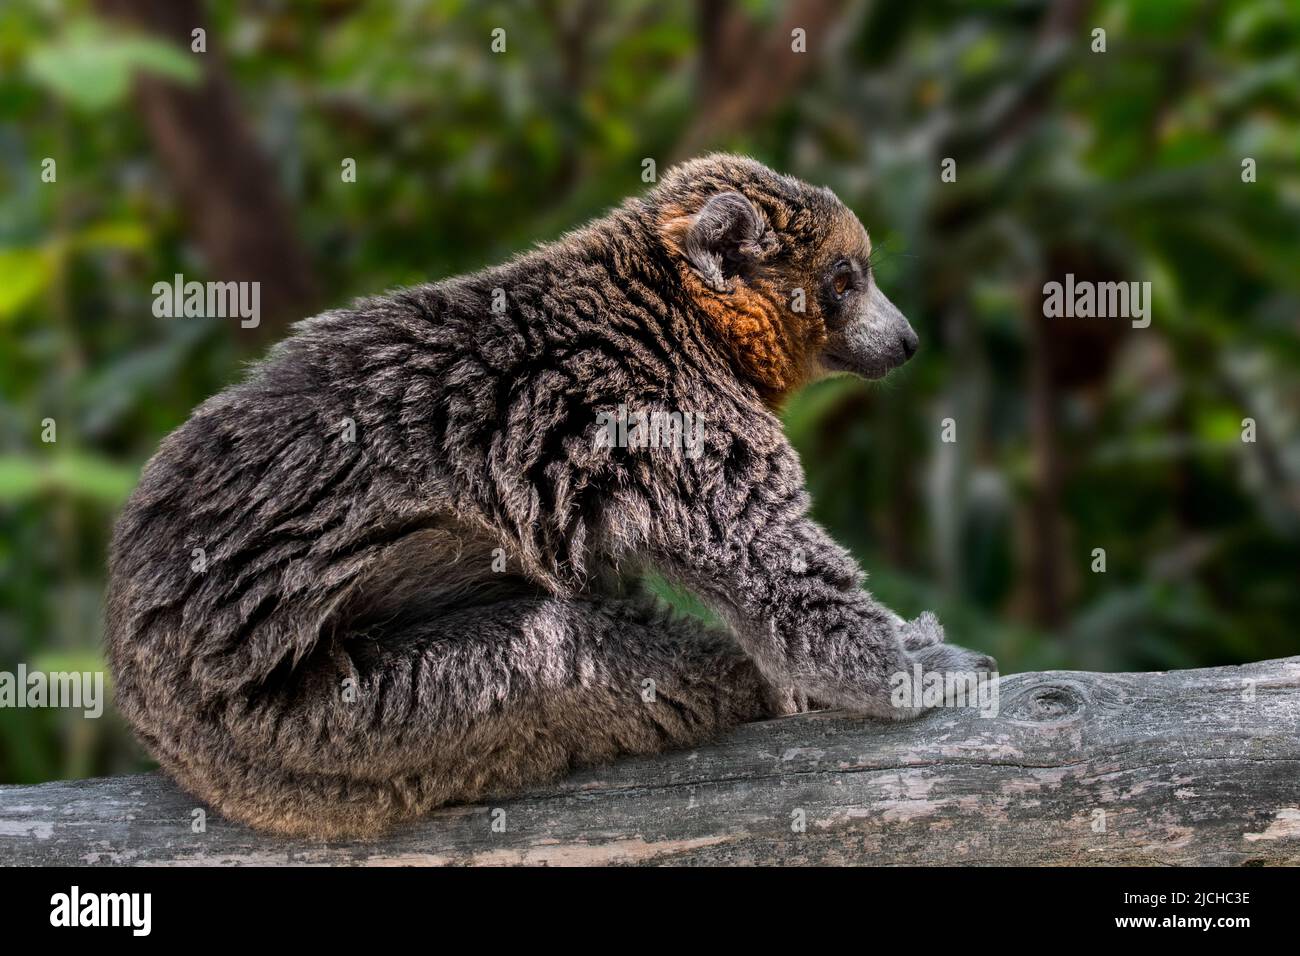 Mongoose lemur (Eulemur mongoz / Lemur albimanus), primate native to Madagascar and introduced to the Comoros Islands, Africa Stock Photo